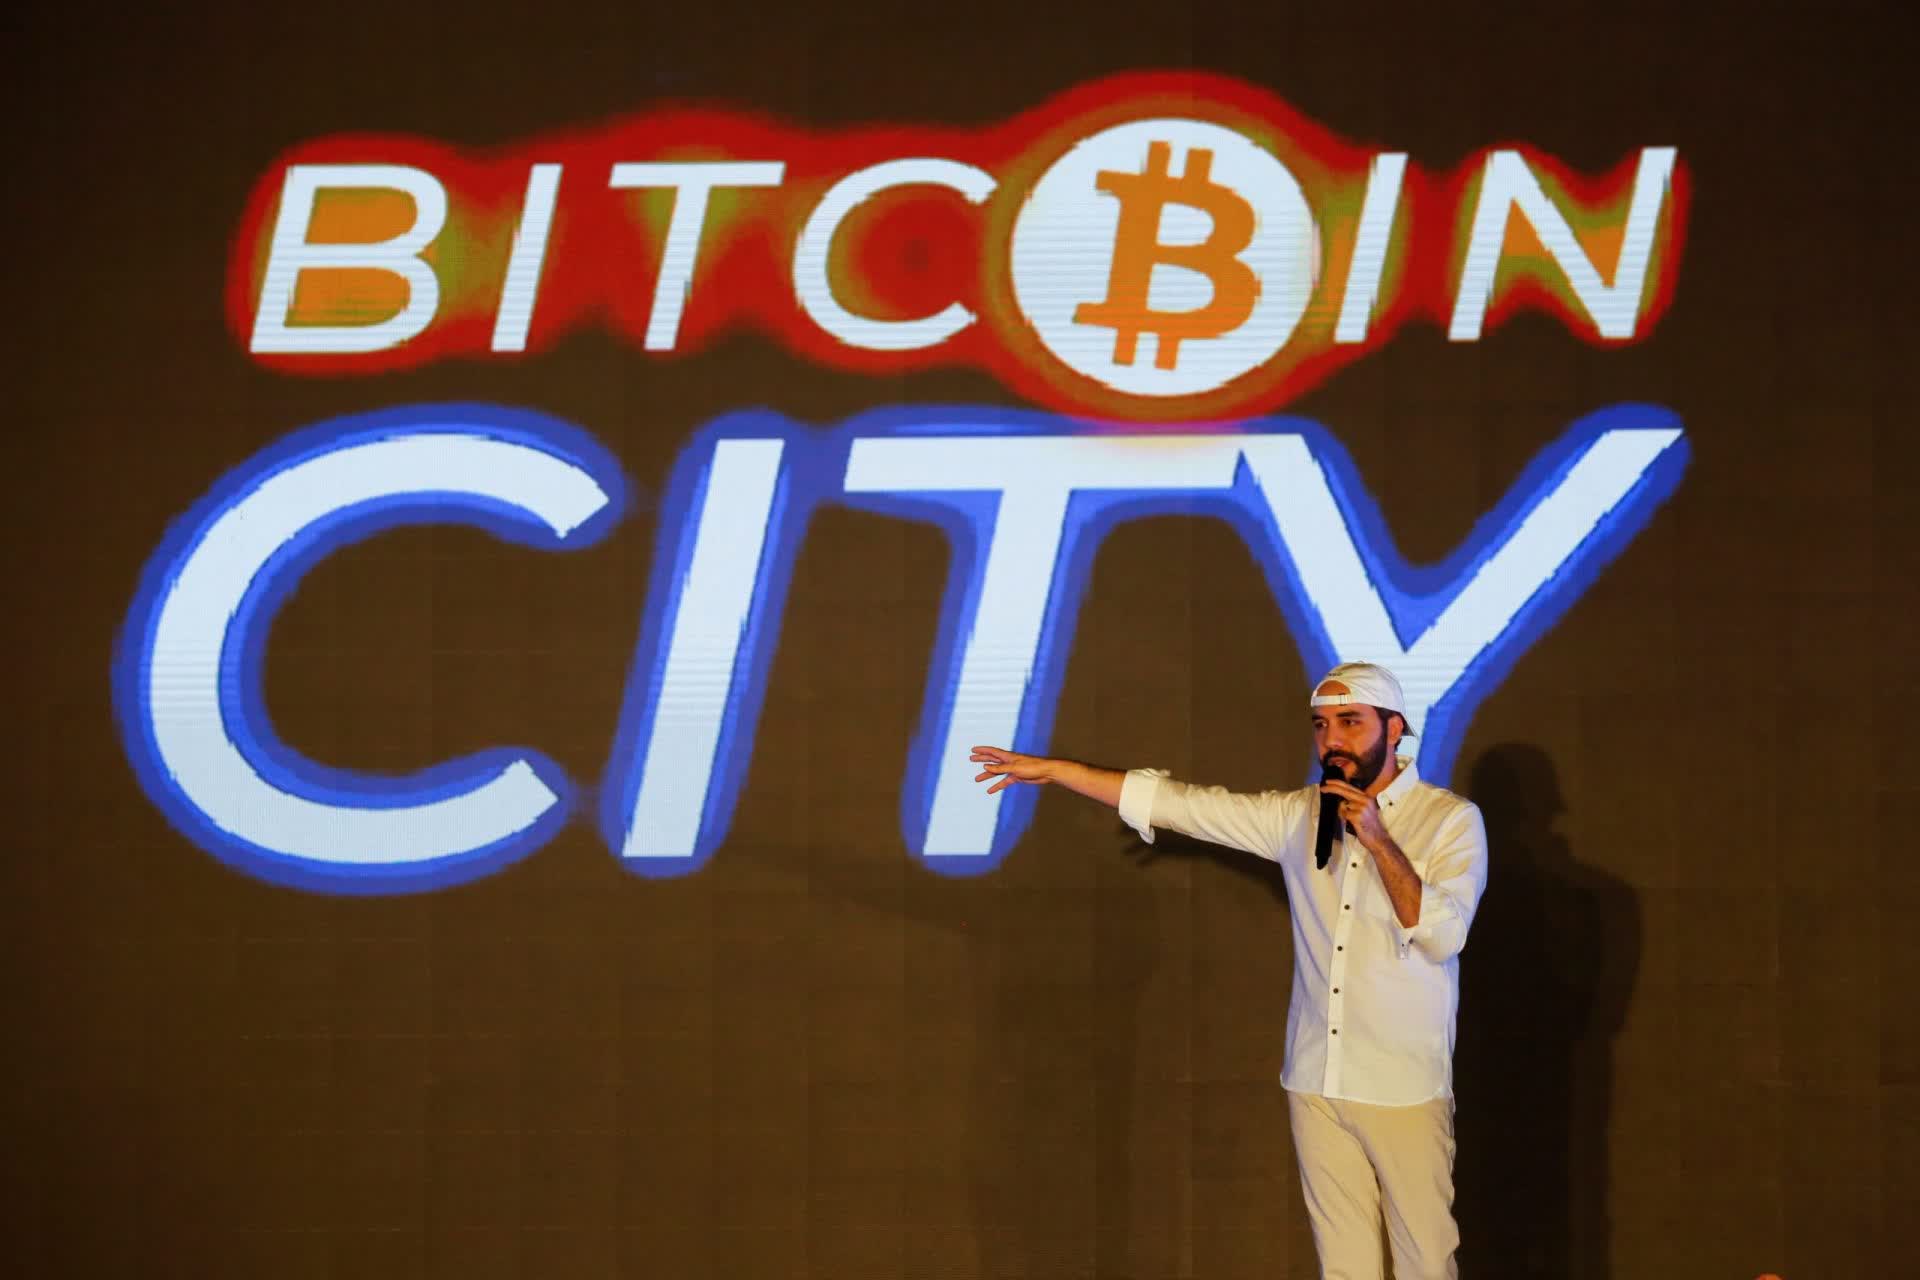 El Salvador reveals plans to build Bitcoin city